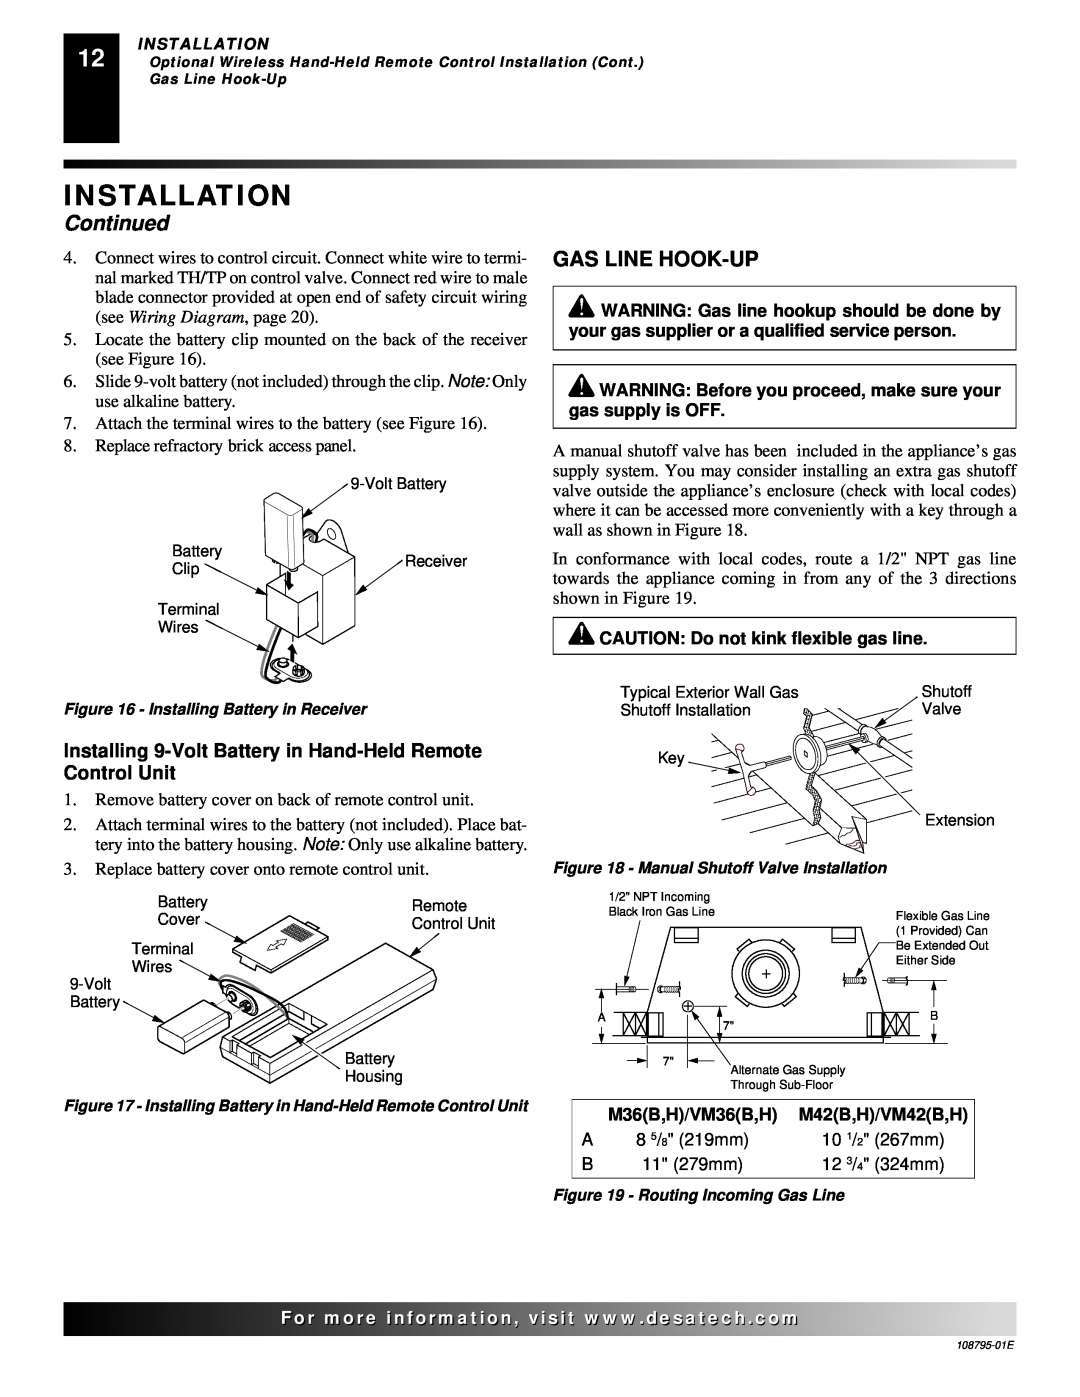 Desa installation manual Installation, Continued, CAUTION Do not kink flexible gas line, M36B,H/VM36B,H, M42B,H/VM42B,H 